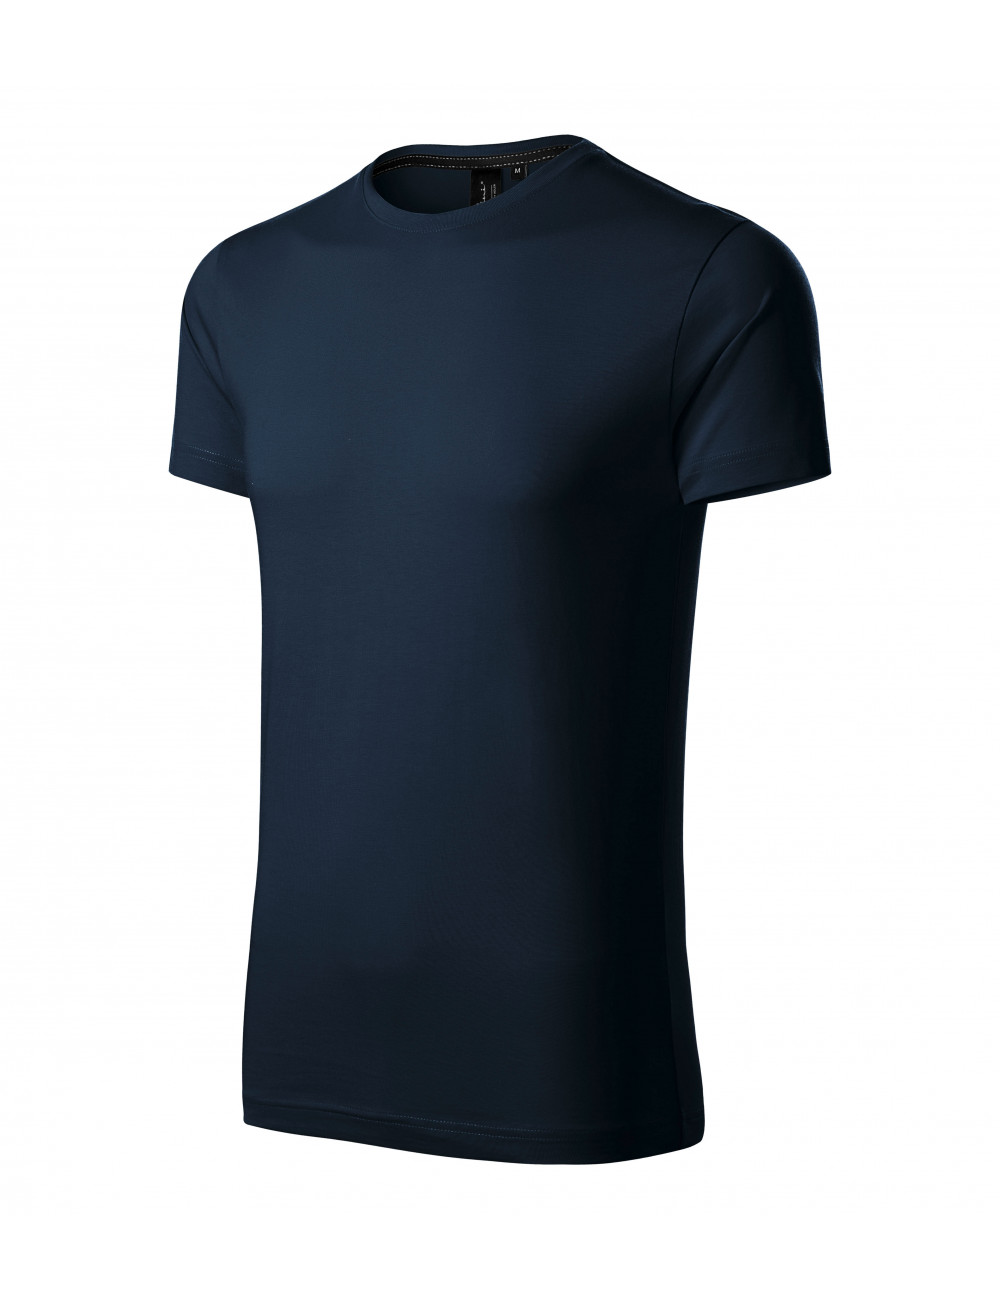 Herren T-Shirt exklusiv 153 marineblau Adler Malfinipremium